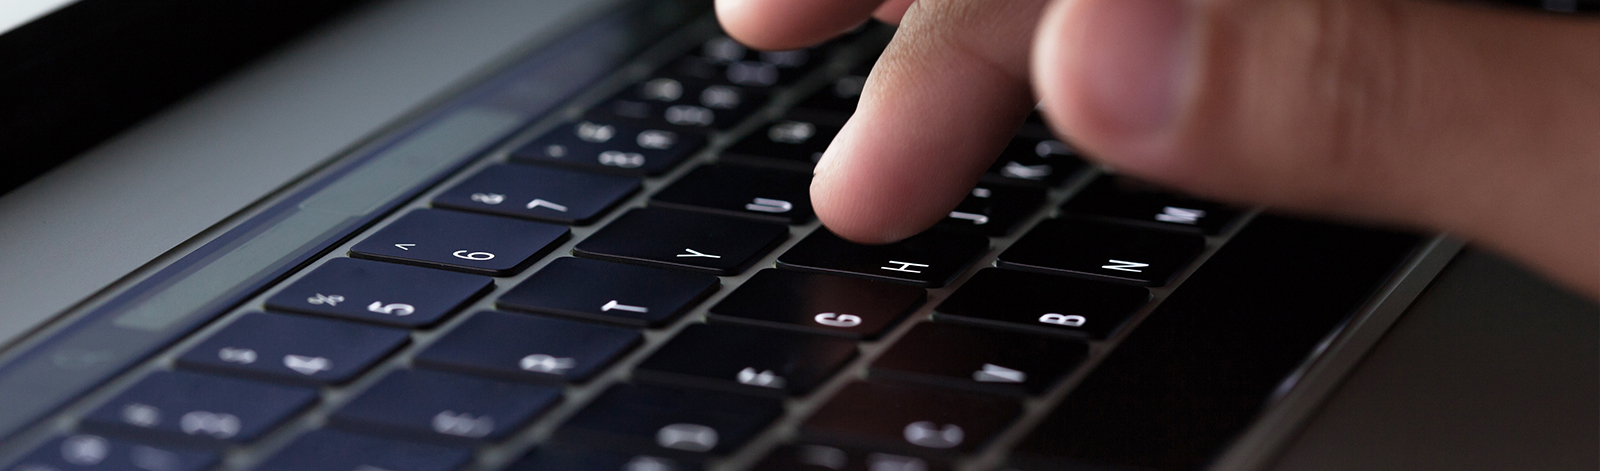 Finger typing on laptop